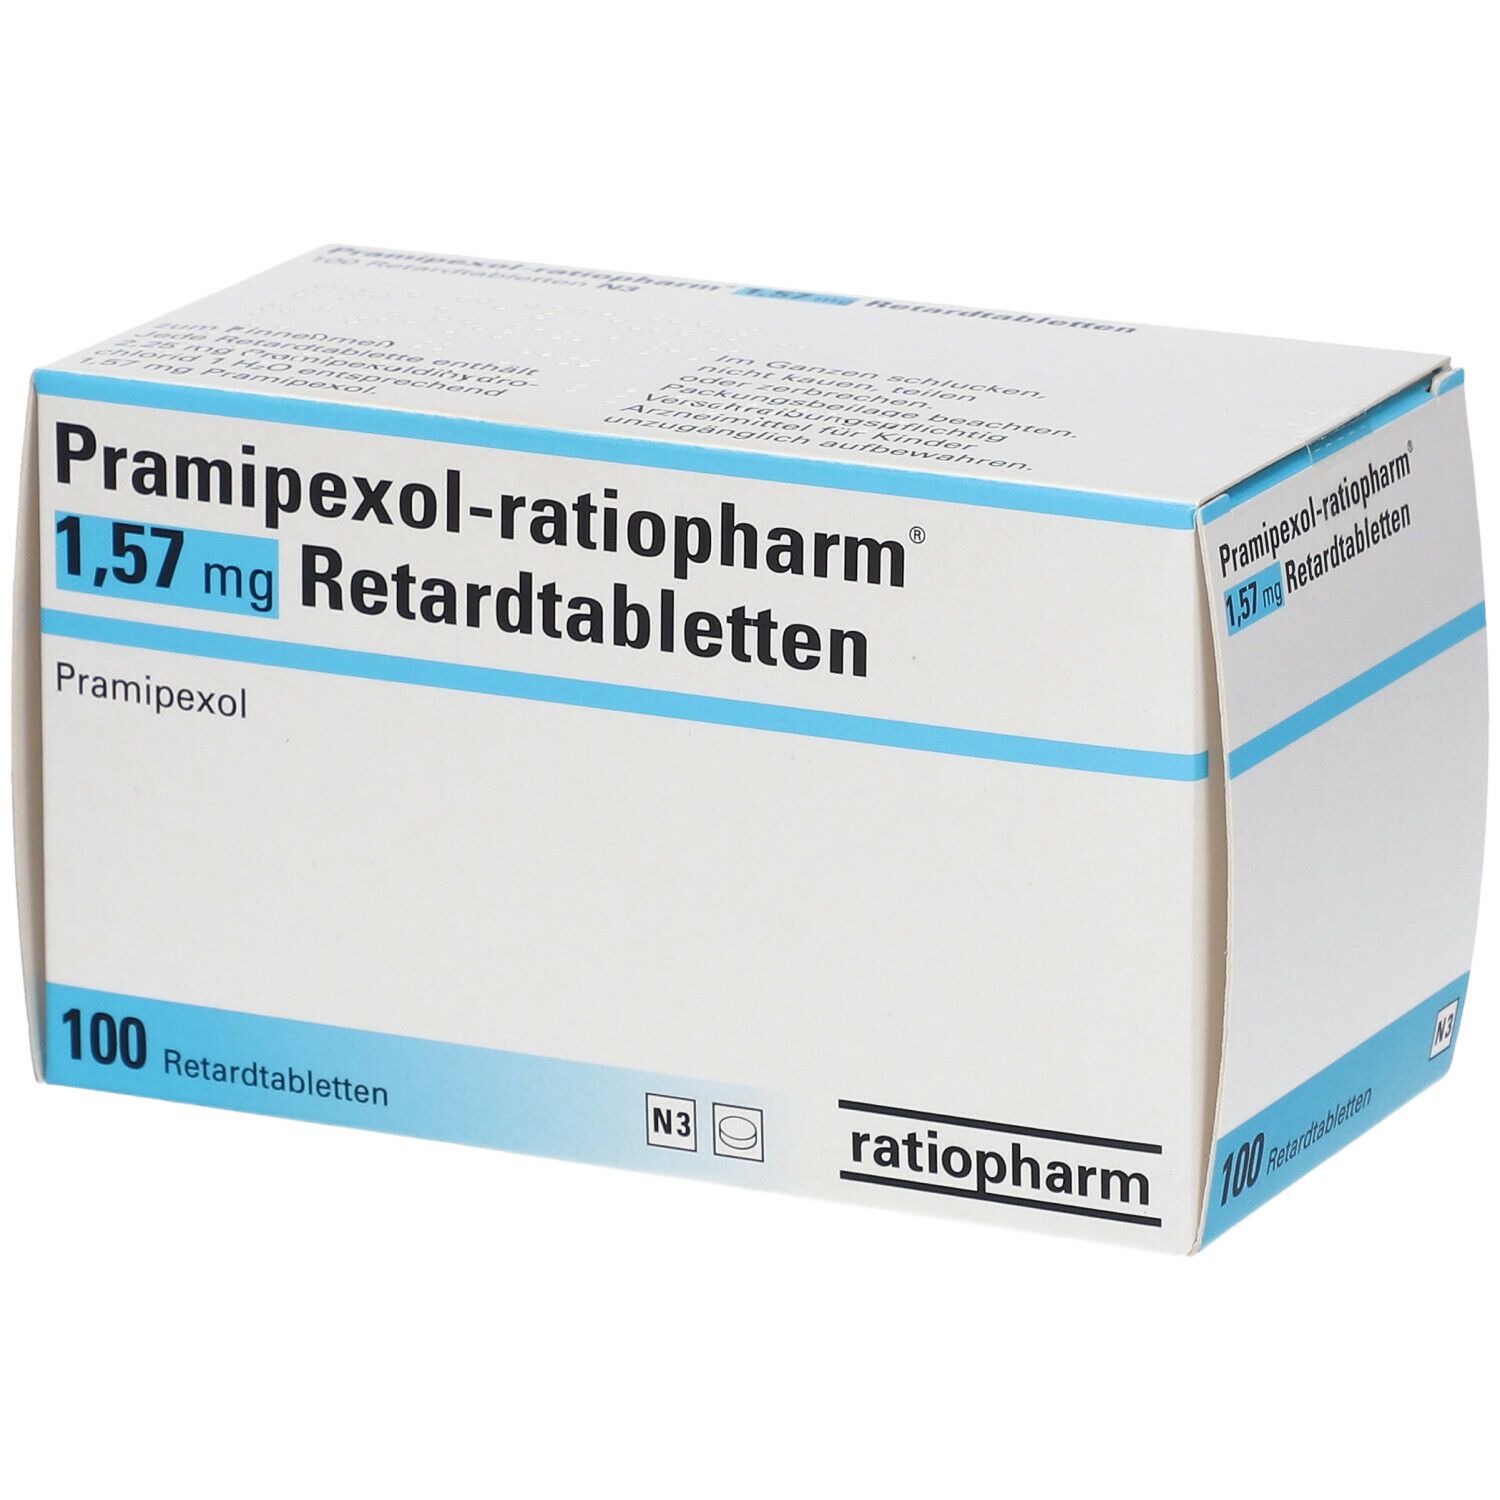 Pramipexol-ratiopharm® 1,57 mg